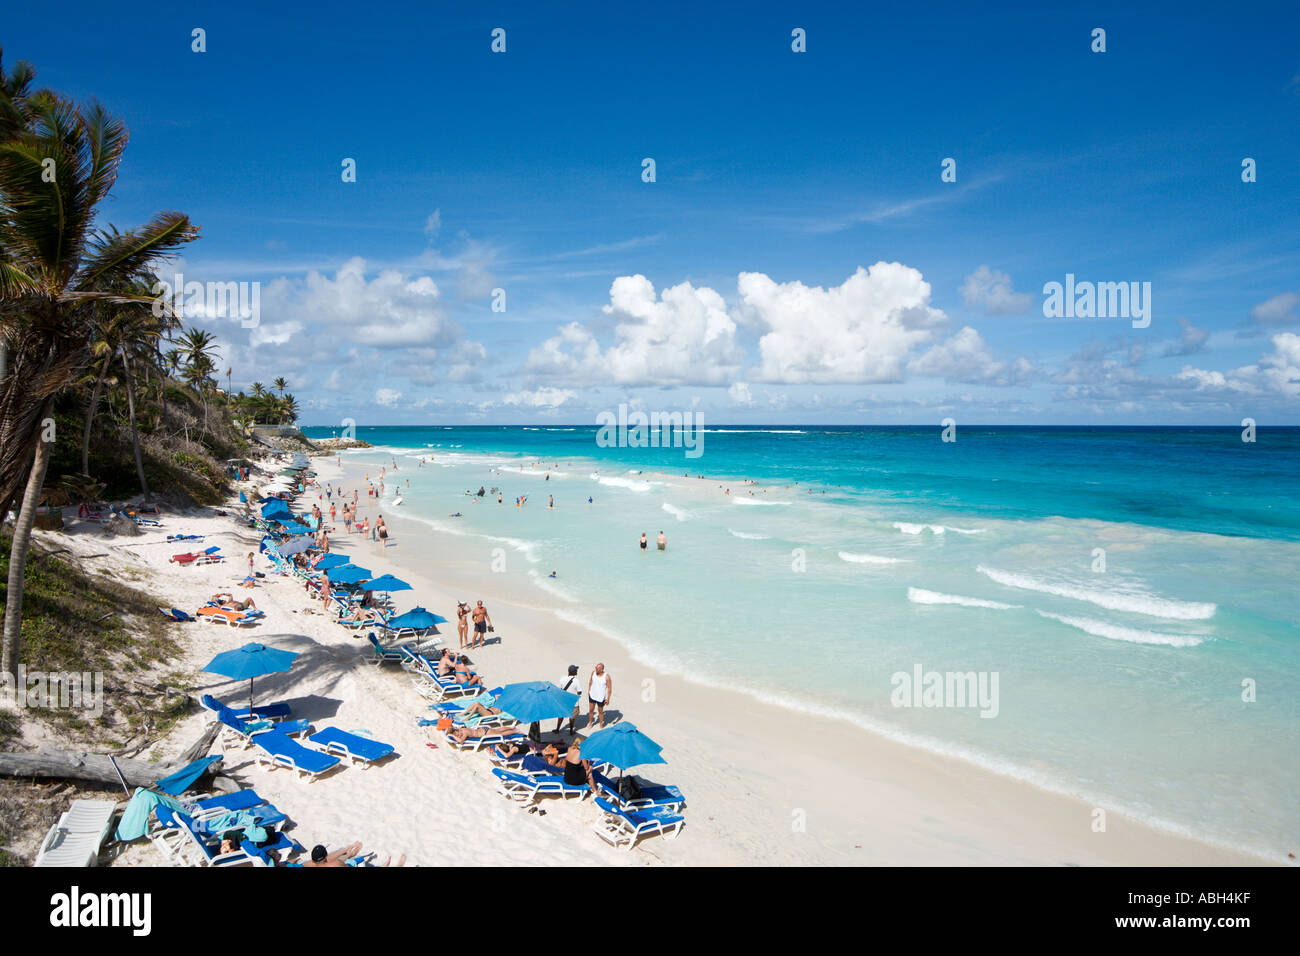 Crane Beach, South East Coast, Barbados, kleine Antillen, Karibik, Caribbean Stockfoto